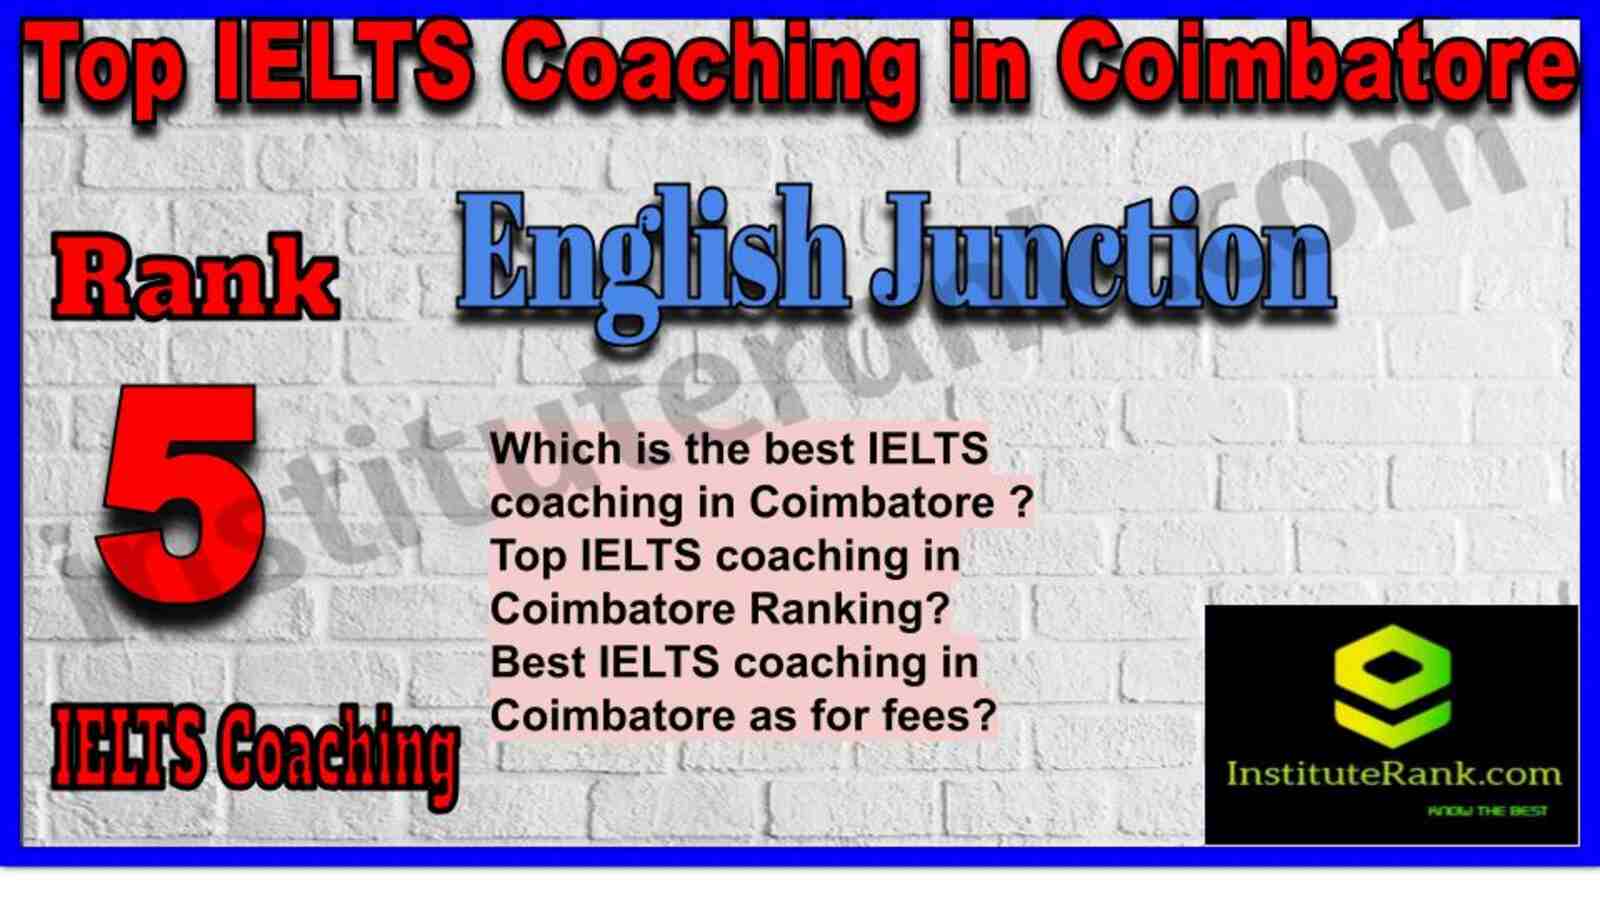 Rank 5. English Junction | Best IELTS Coaching in Coimbatore